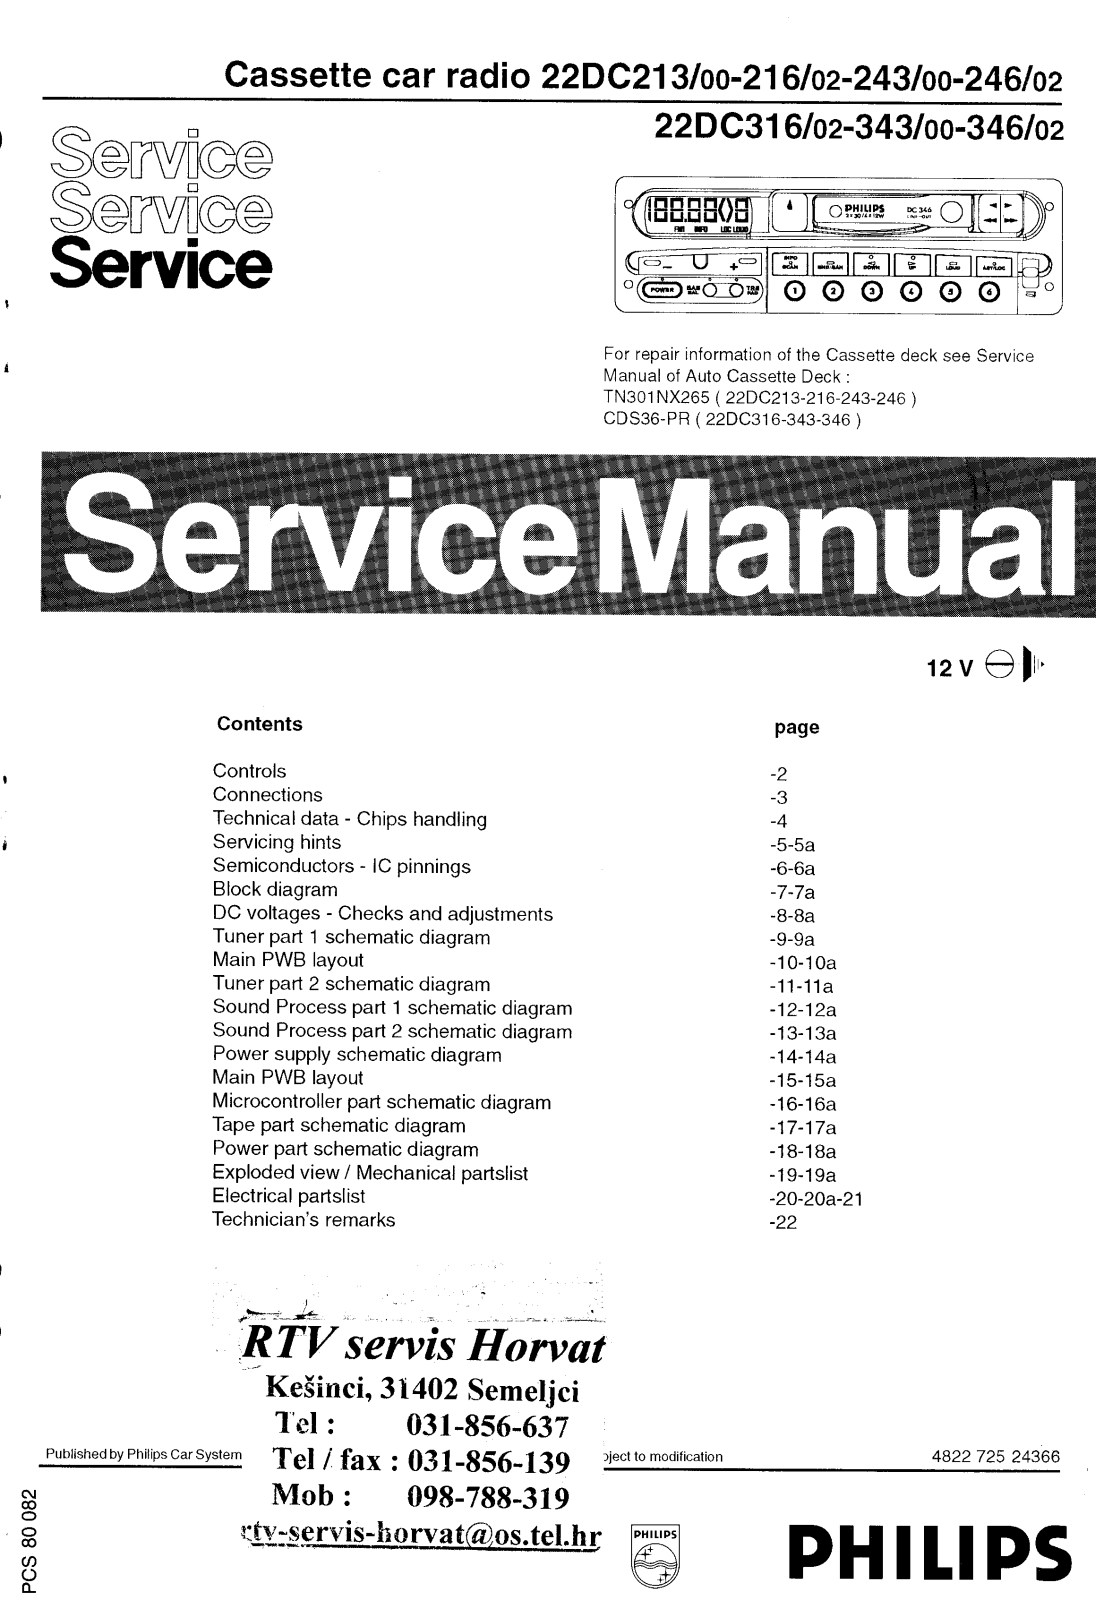 Philips 22DC213, 22DC216, 22DC243, 22DC246, 22DC313 Service manual